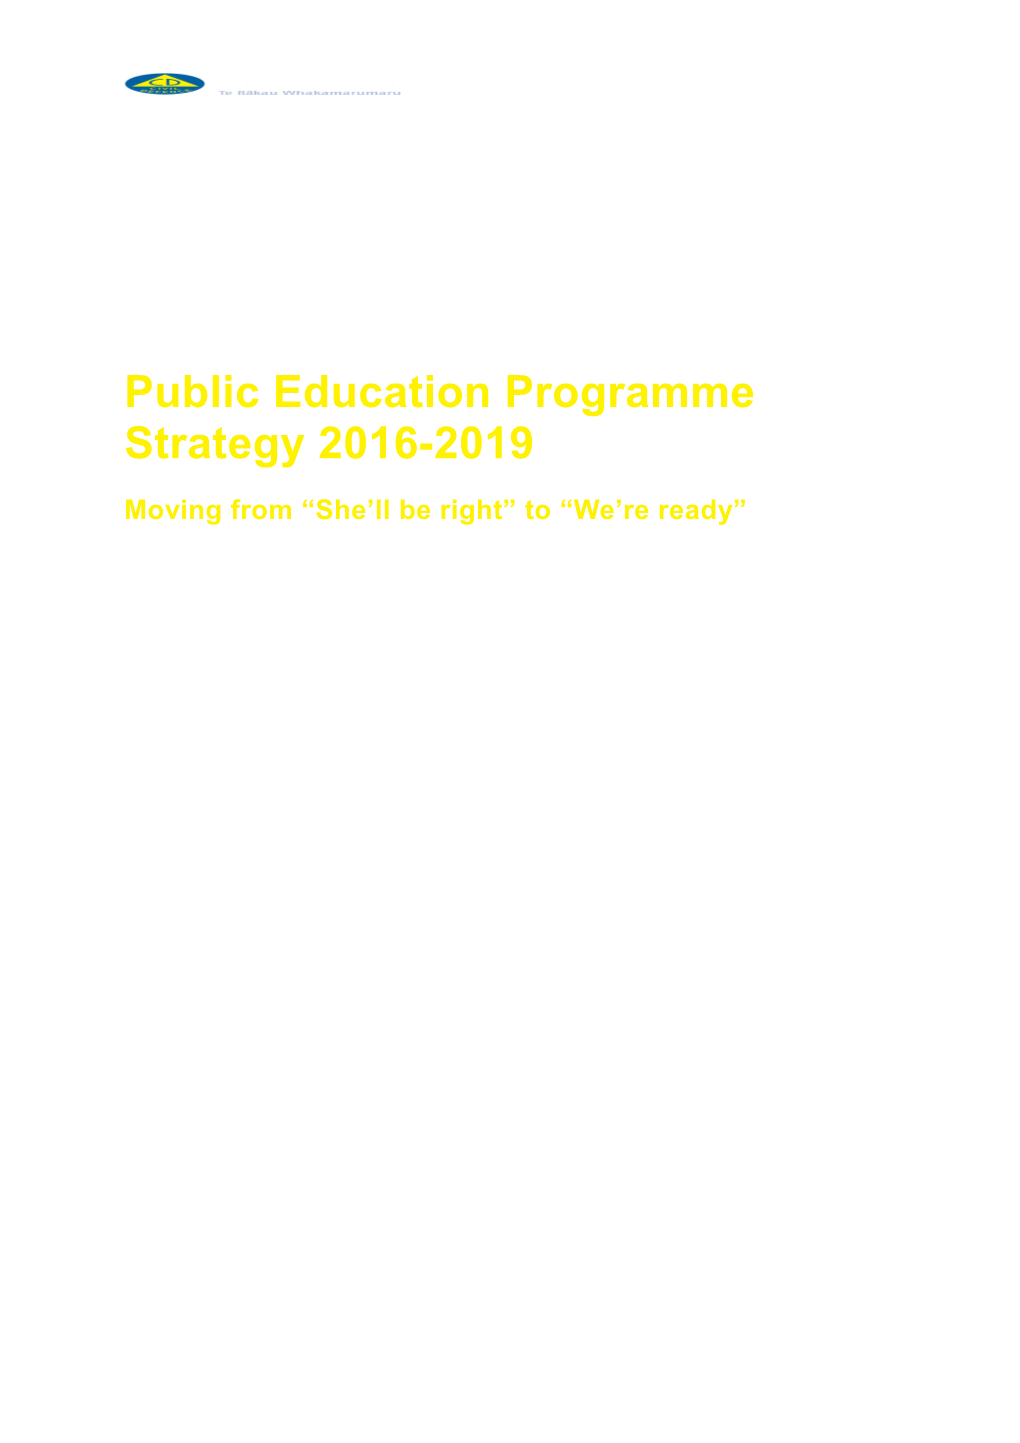 Public Education Programme Strategy 2016-2019